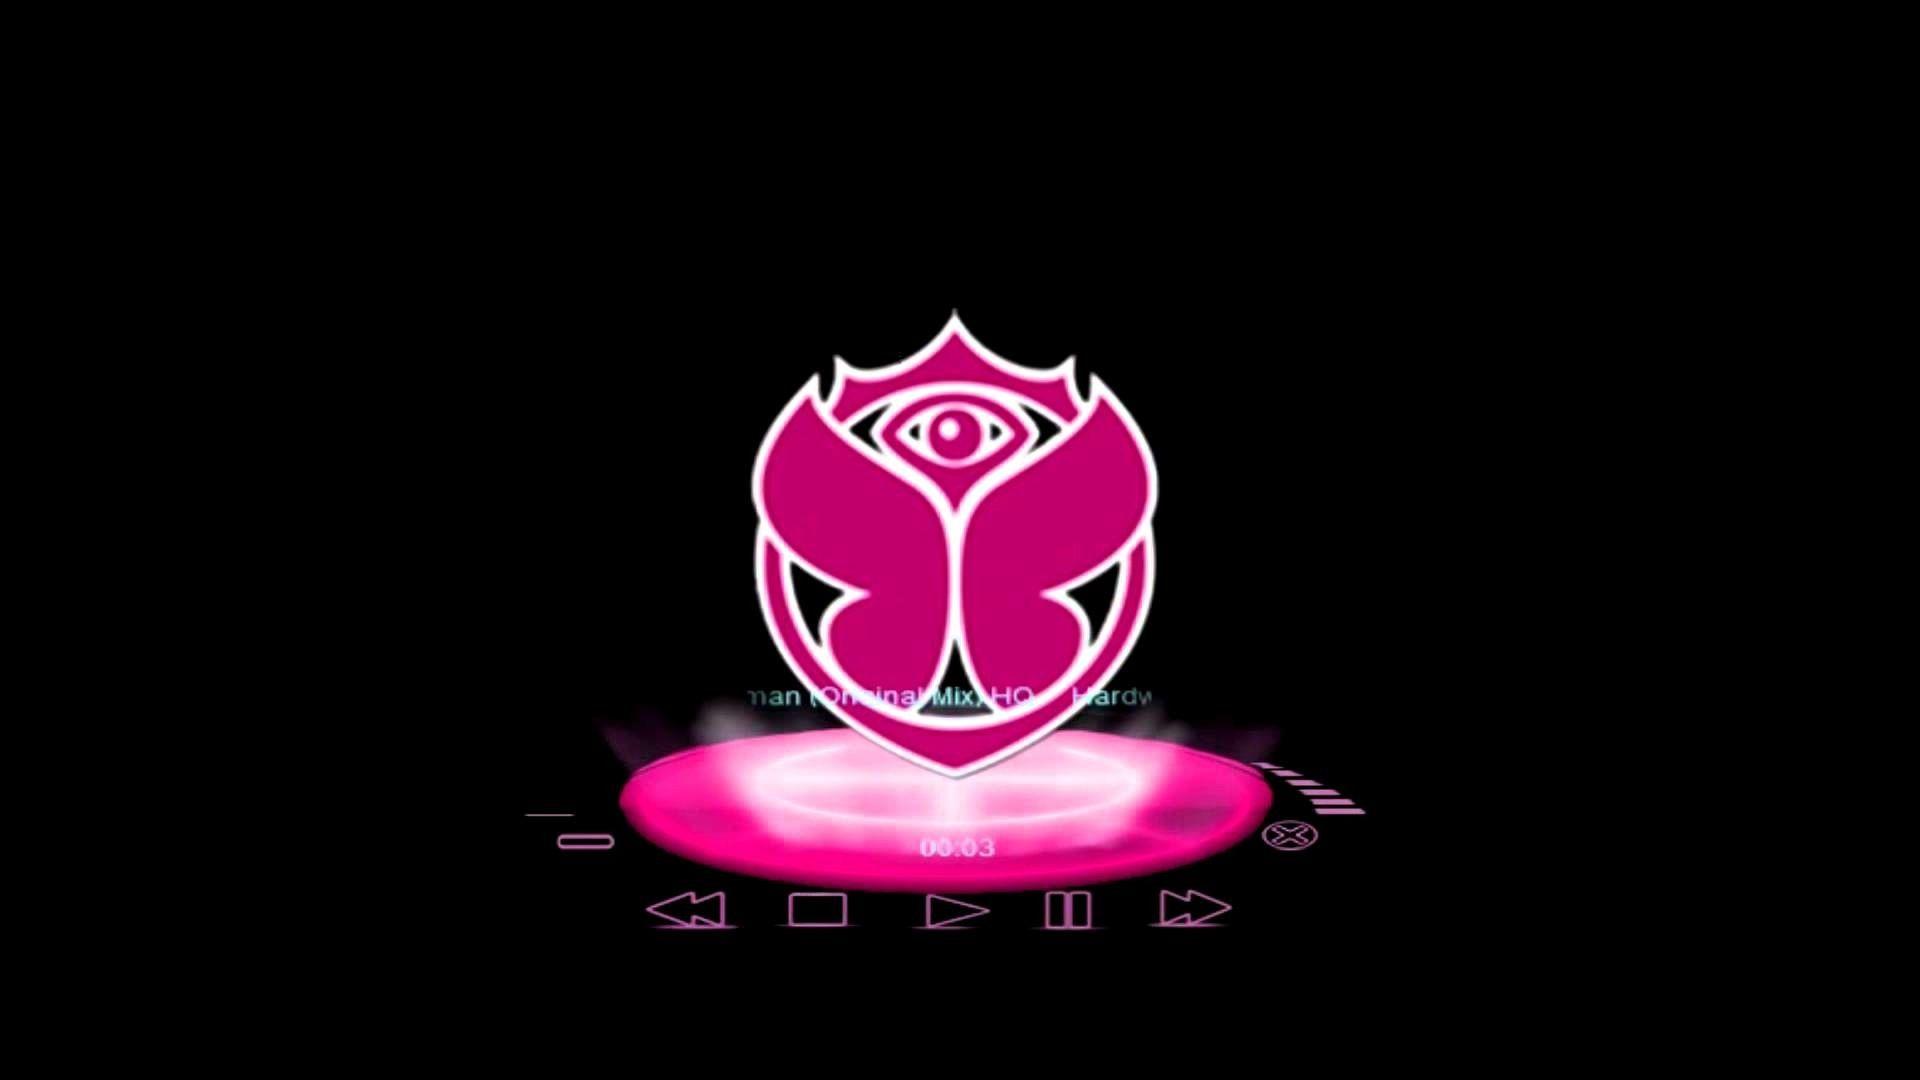 Tomorrowland Logo Wallpaper